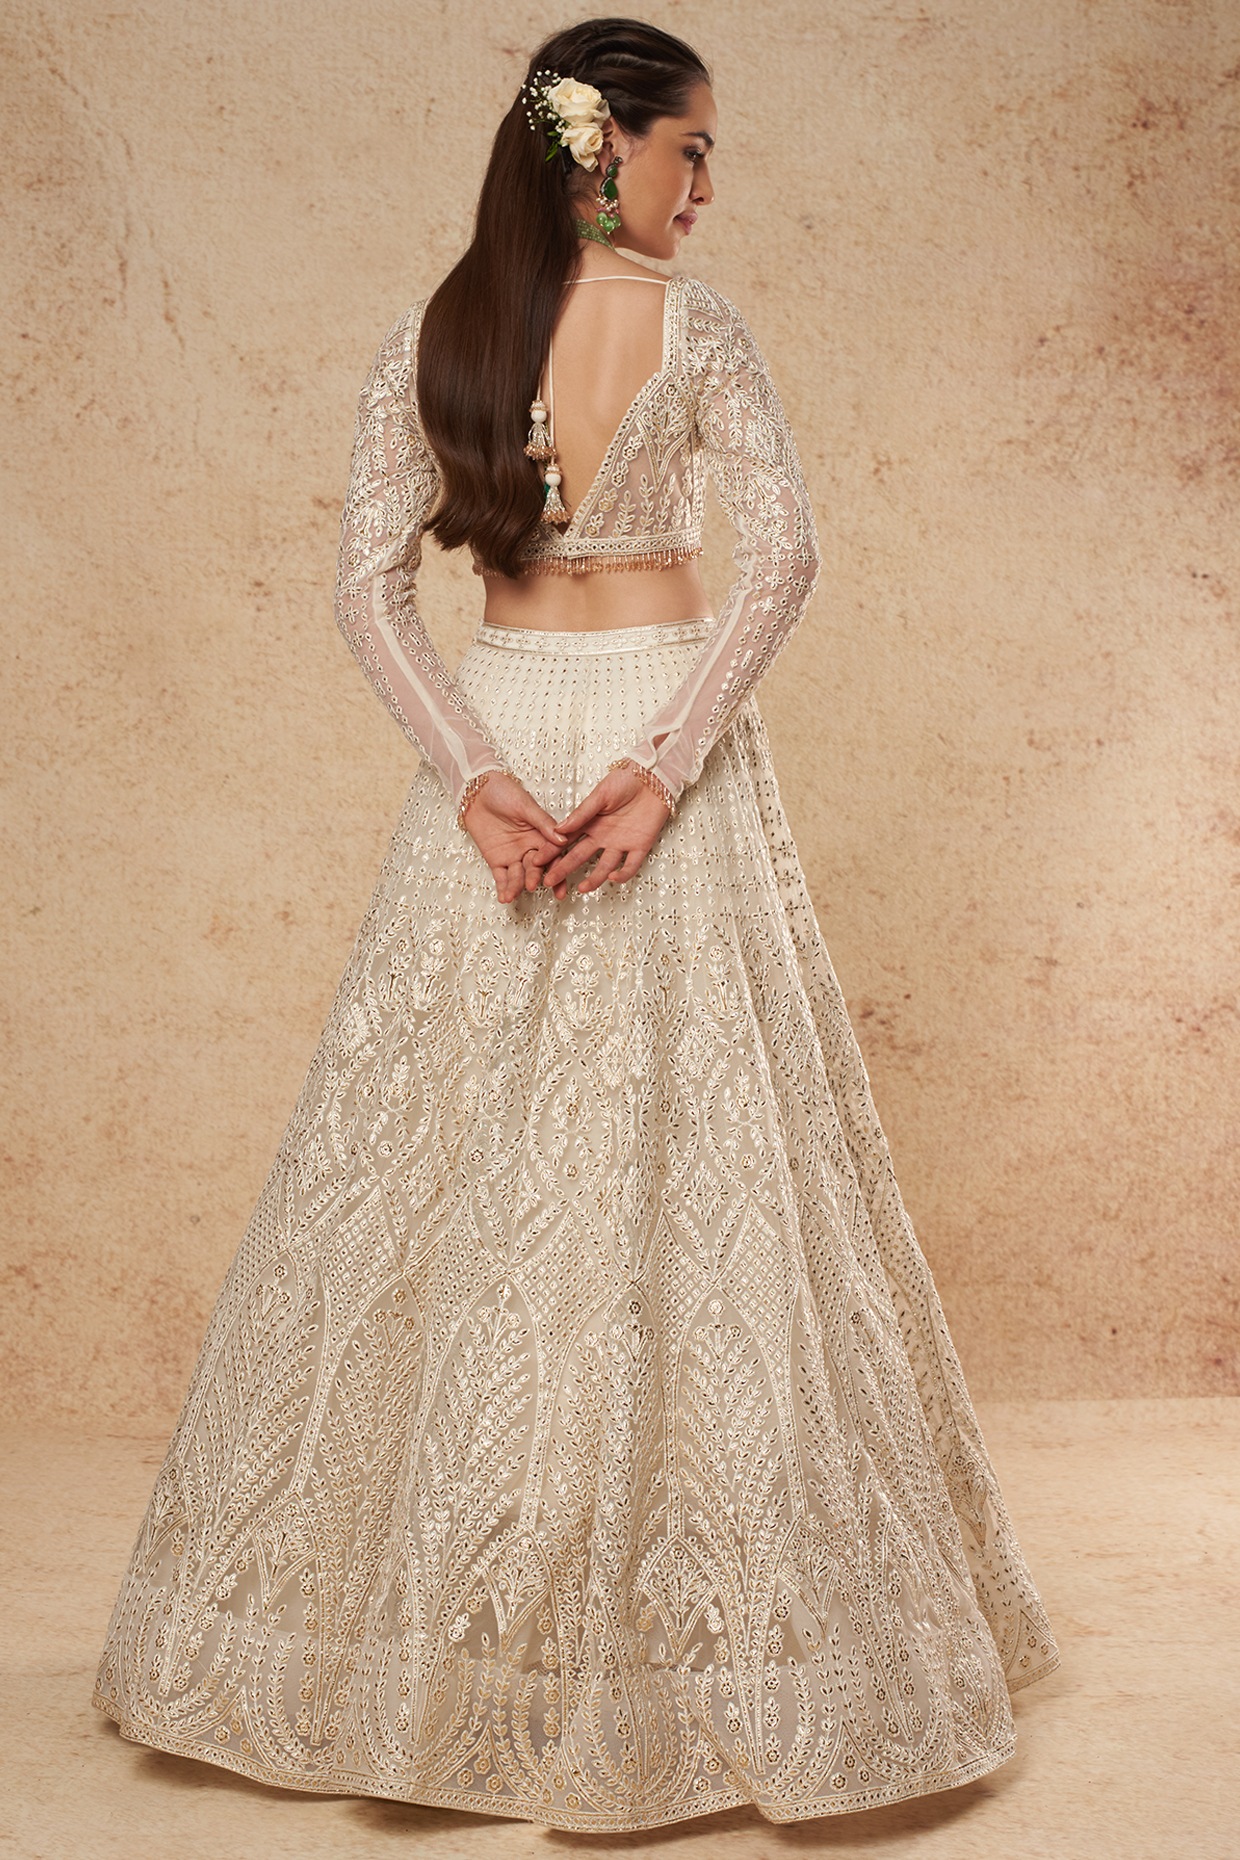 Latest Swoon-Worthy Peacock Design #Lehenga For Every Spirited Bride-to-be  | Designer bridal lehenga, Wedding lehenga designs, Indian bridal dress